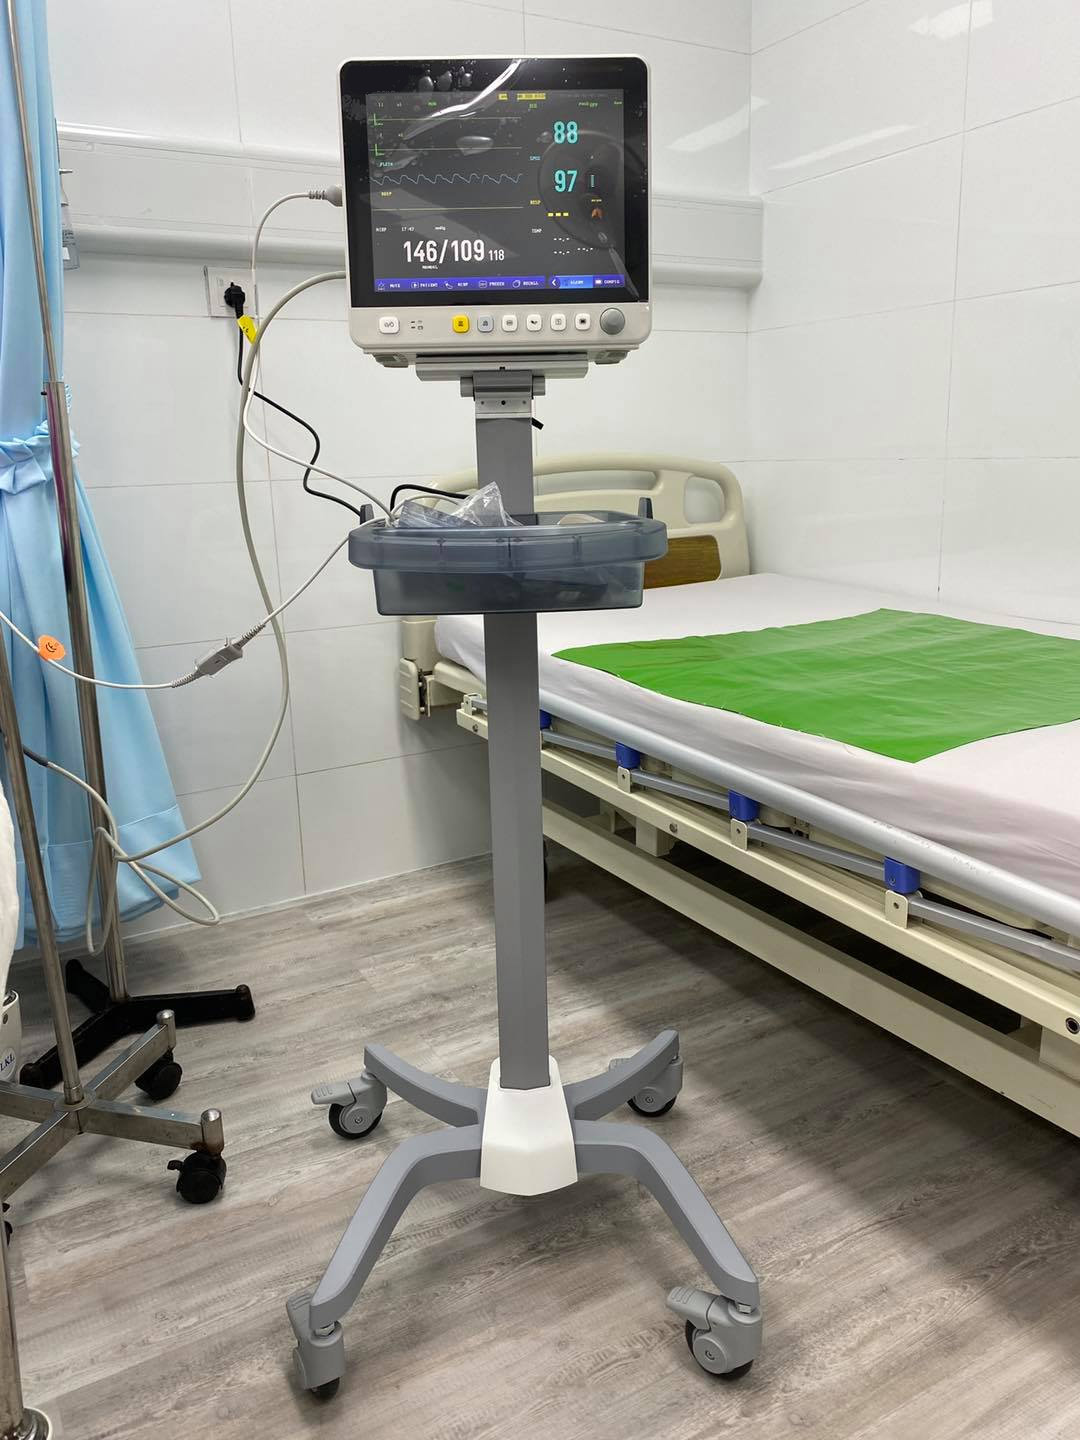 IE12 Moduel Multi-Parameter Patient Monitor